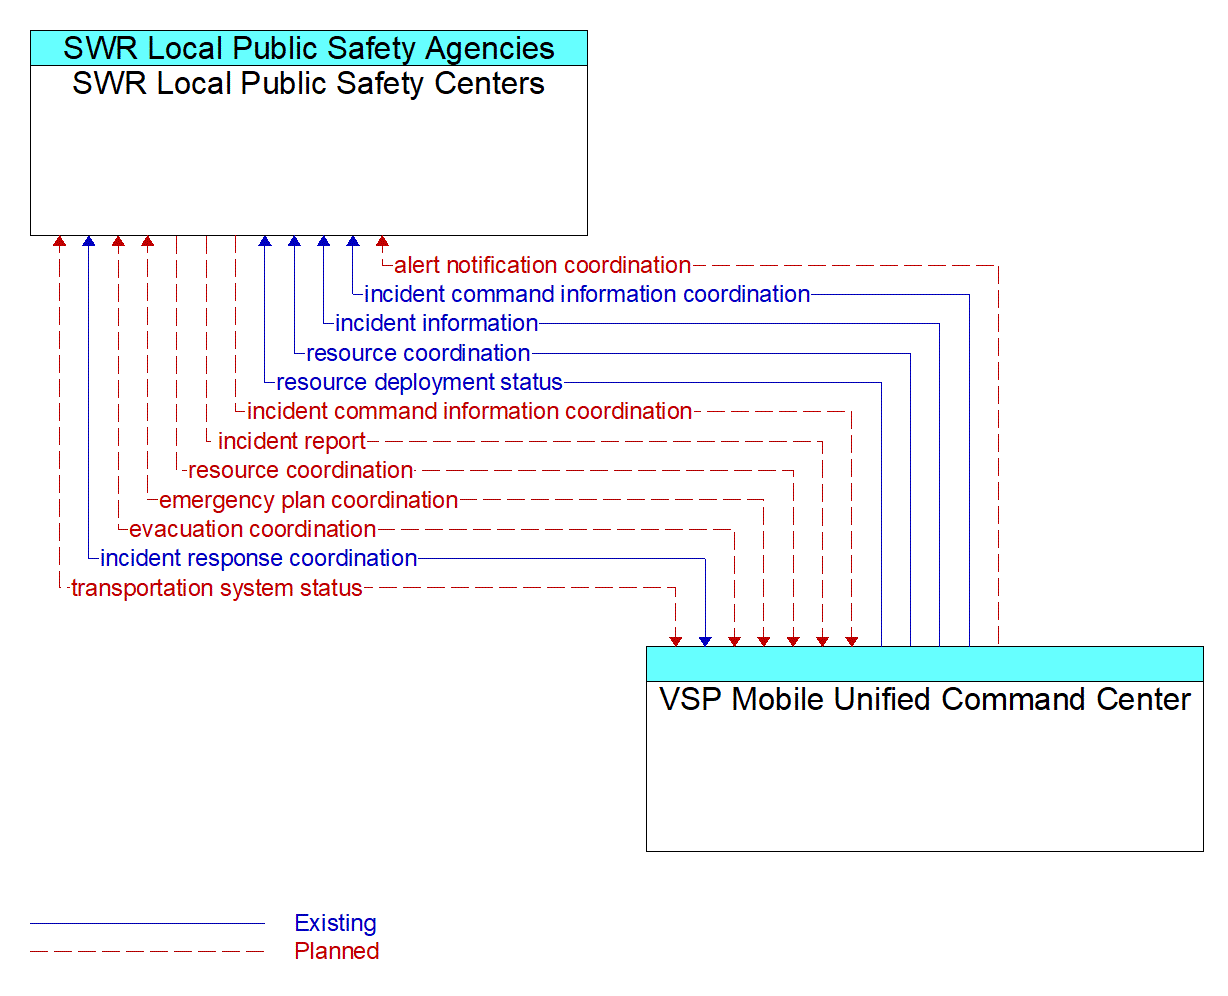 Architecture Flow Diagram: VSP Mobile Unified Command Center <--> SWR Local Public Safety Centers